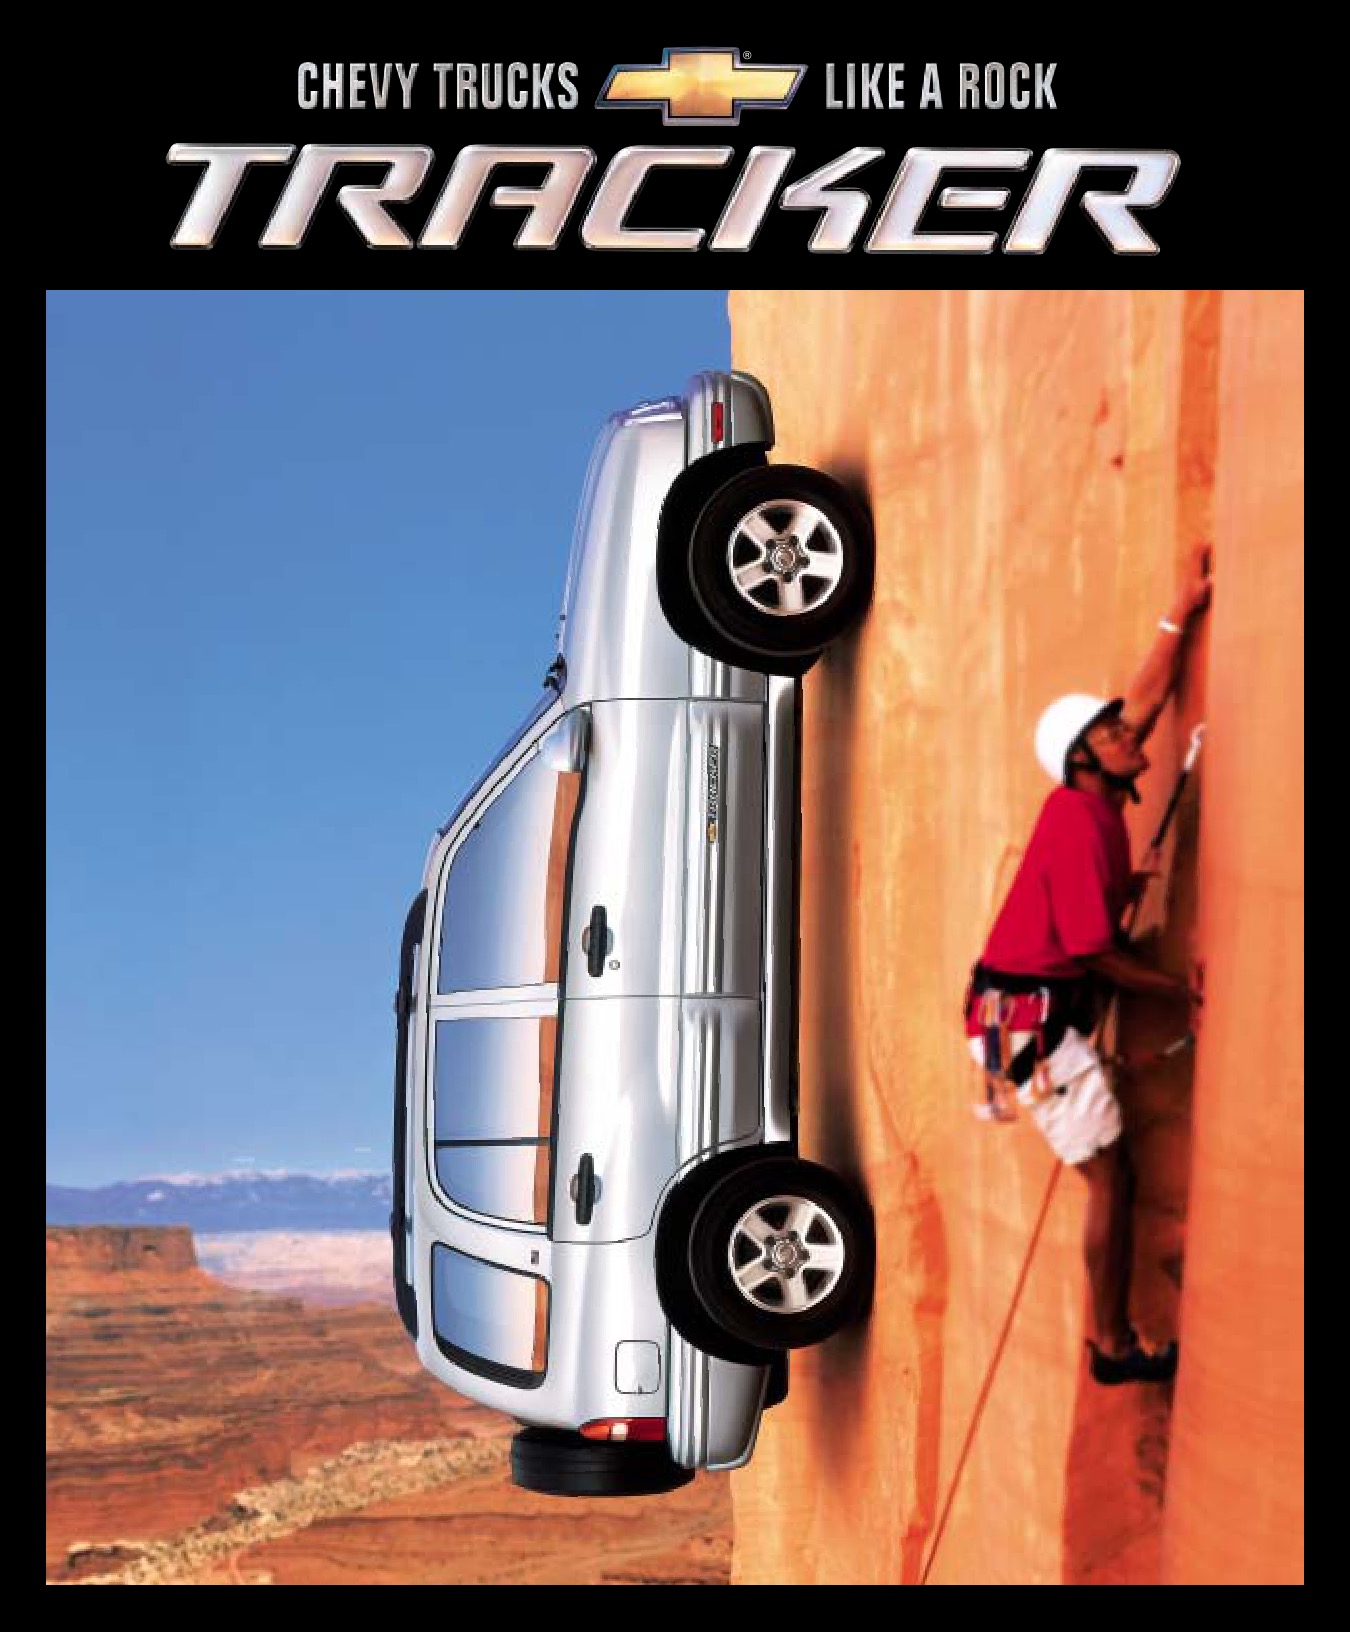 2002 Chevrolet Tracker Brochure